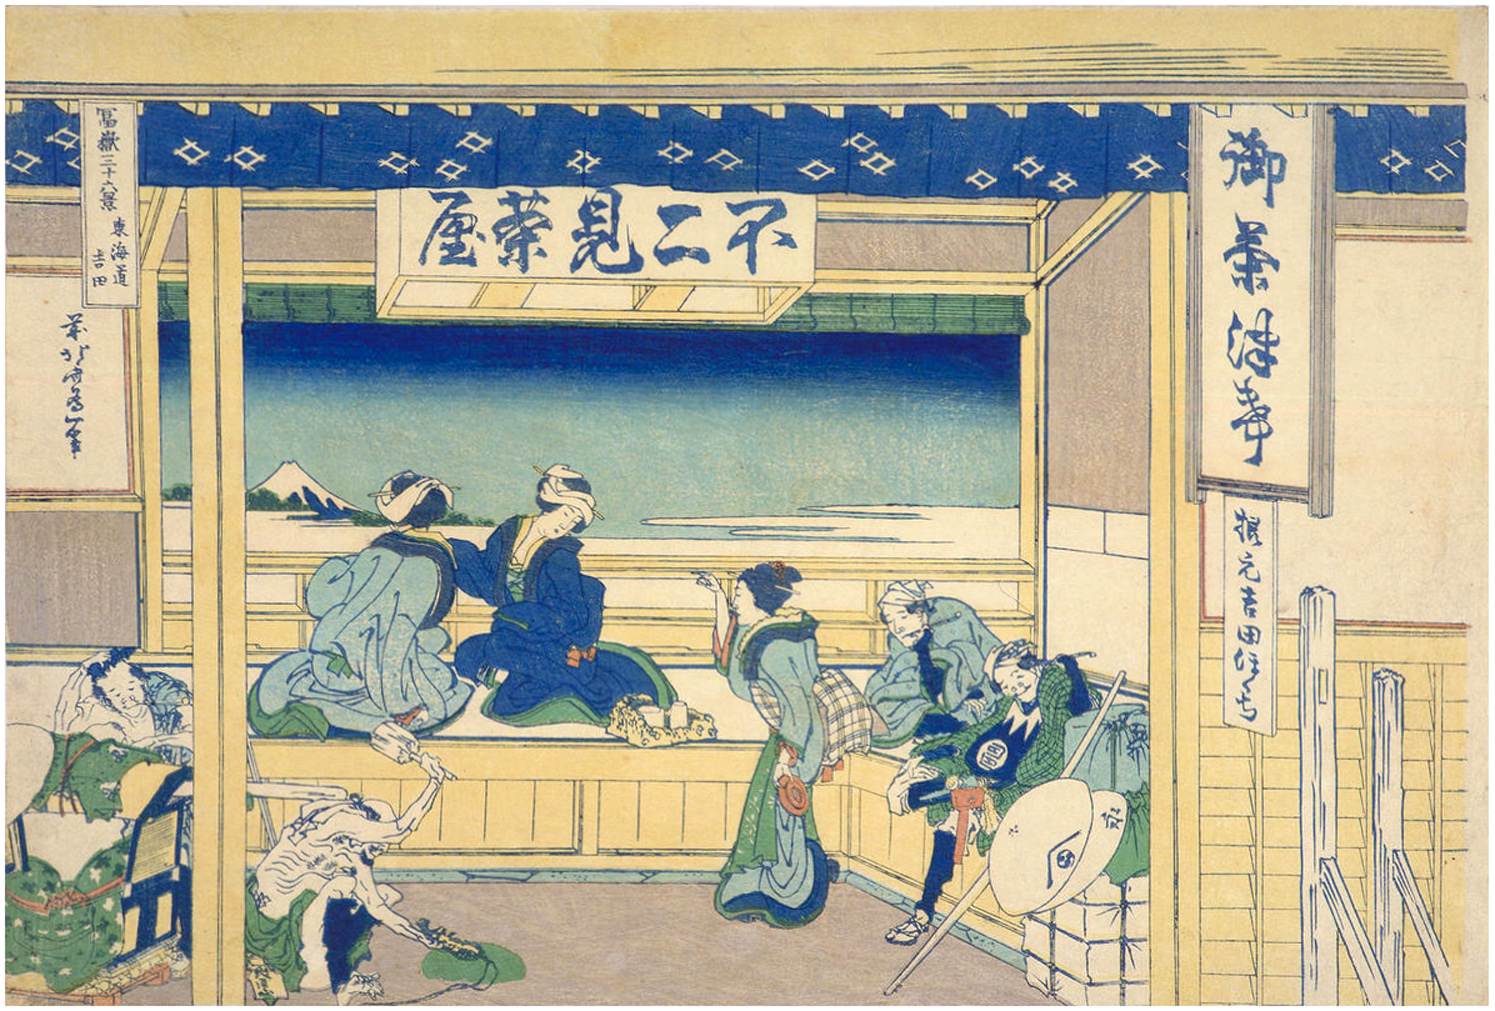 Hokusai - #29 Yoshida on the Tôkaidô - 36 Views of Mt Fuji